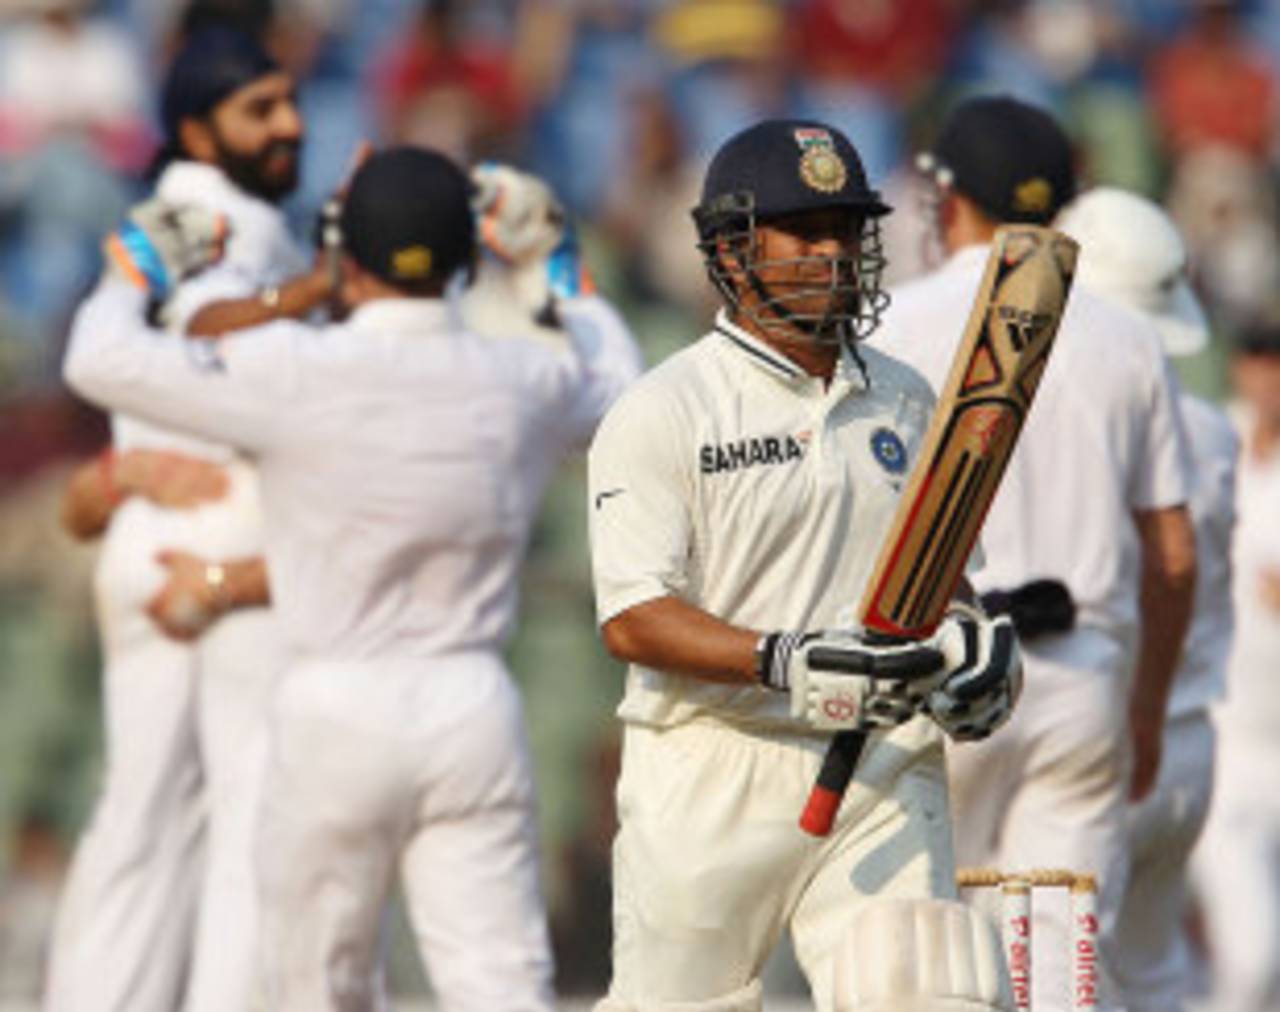 Sachin Tendulkar fell lbw to Monty Panesar, India v England, 2nd Test, Mumbai, 2nd day, November 25, 2012